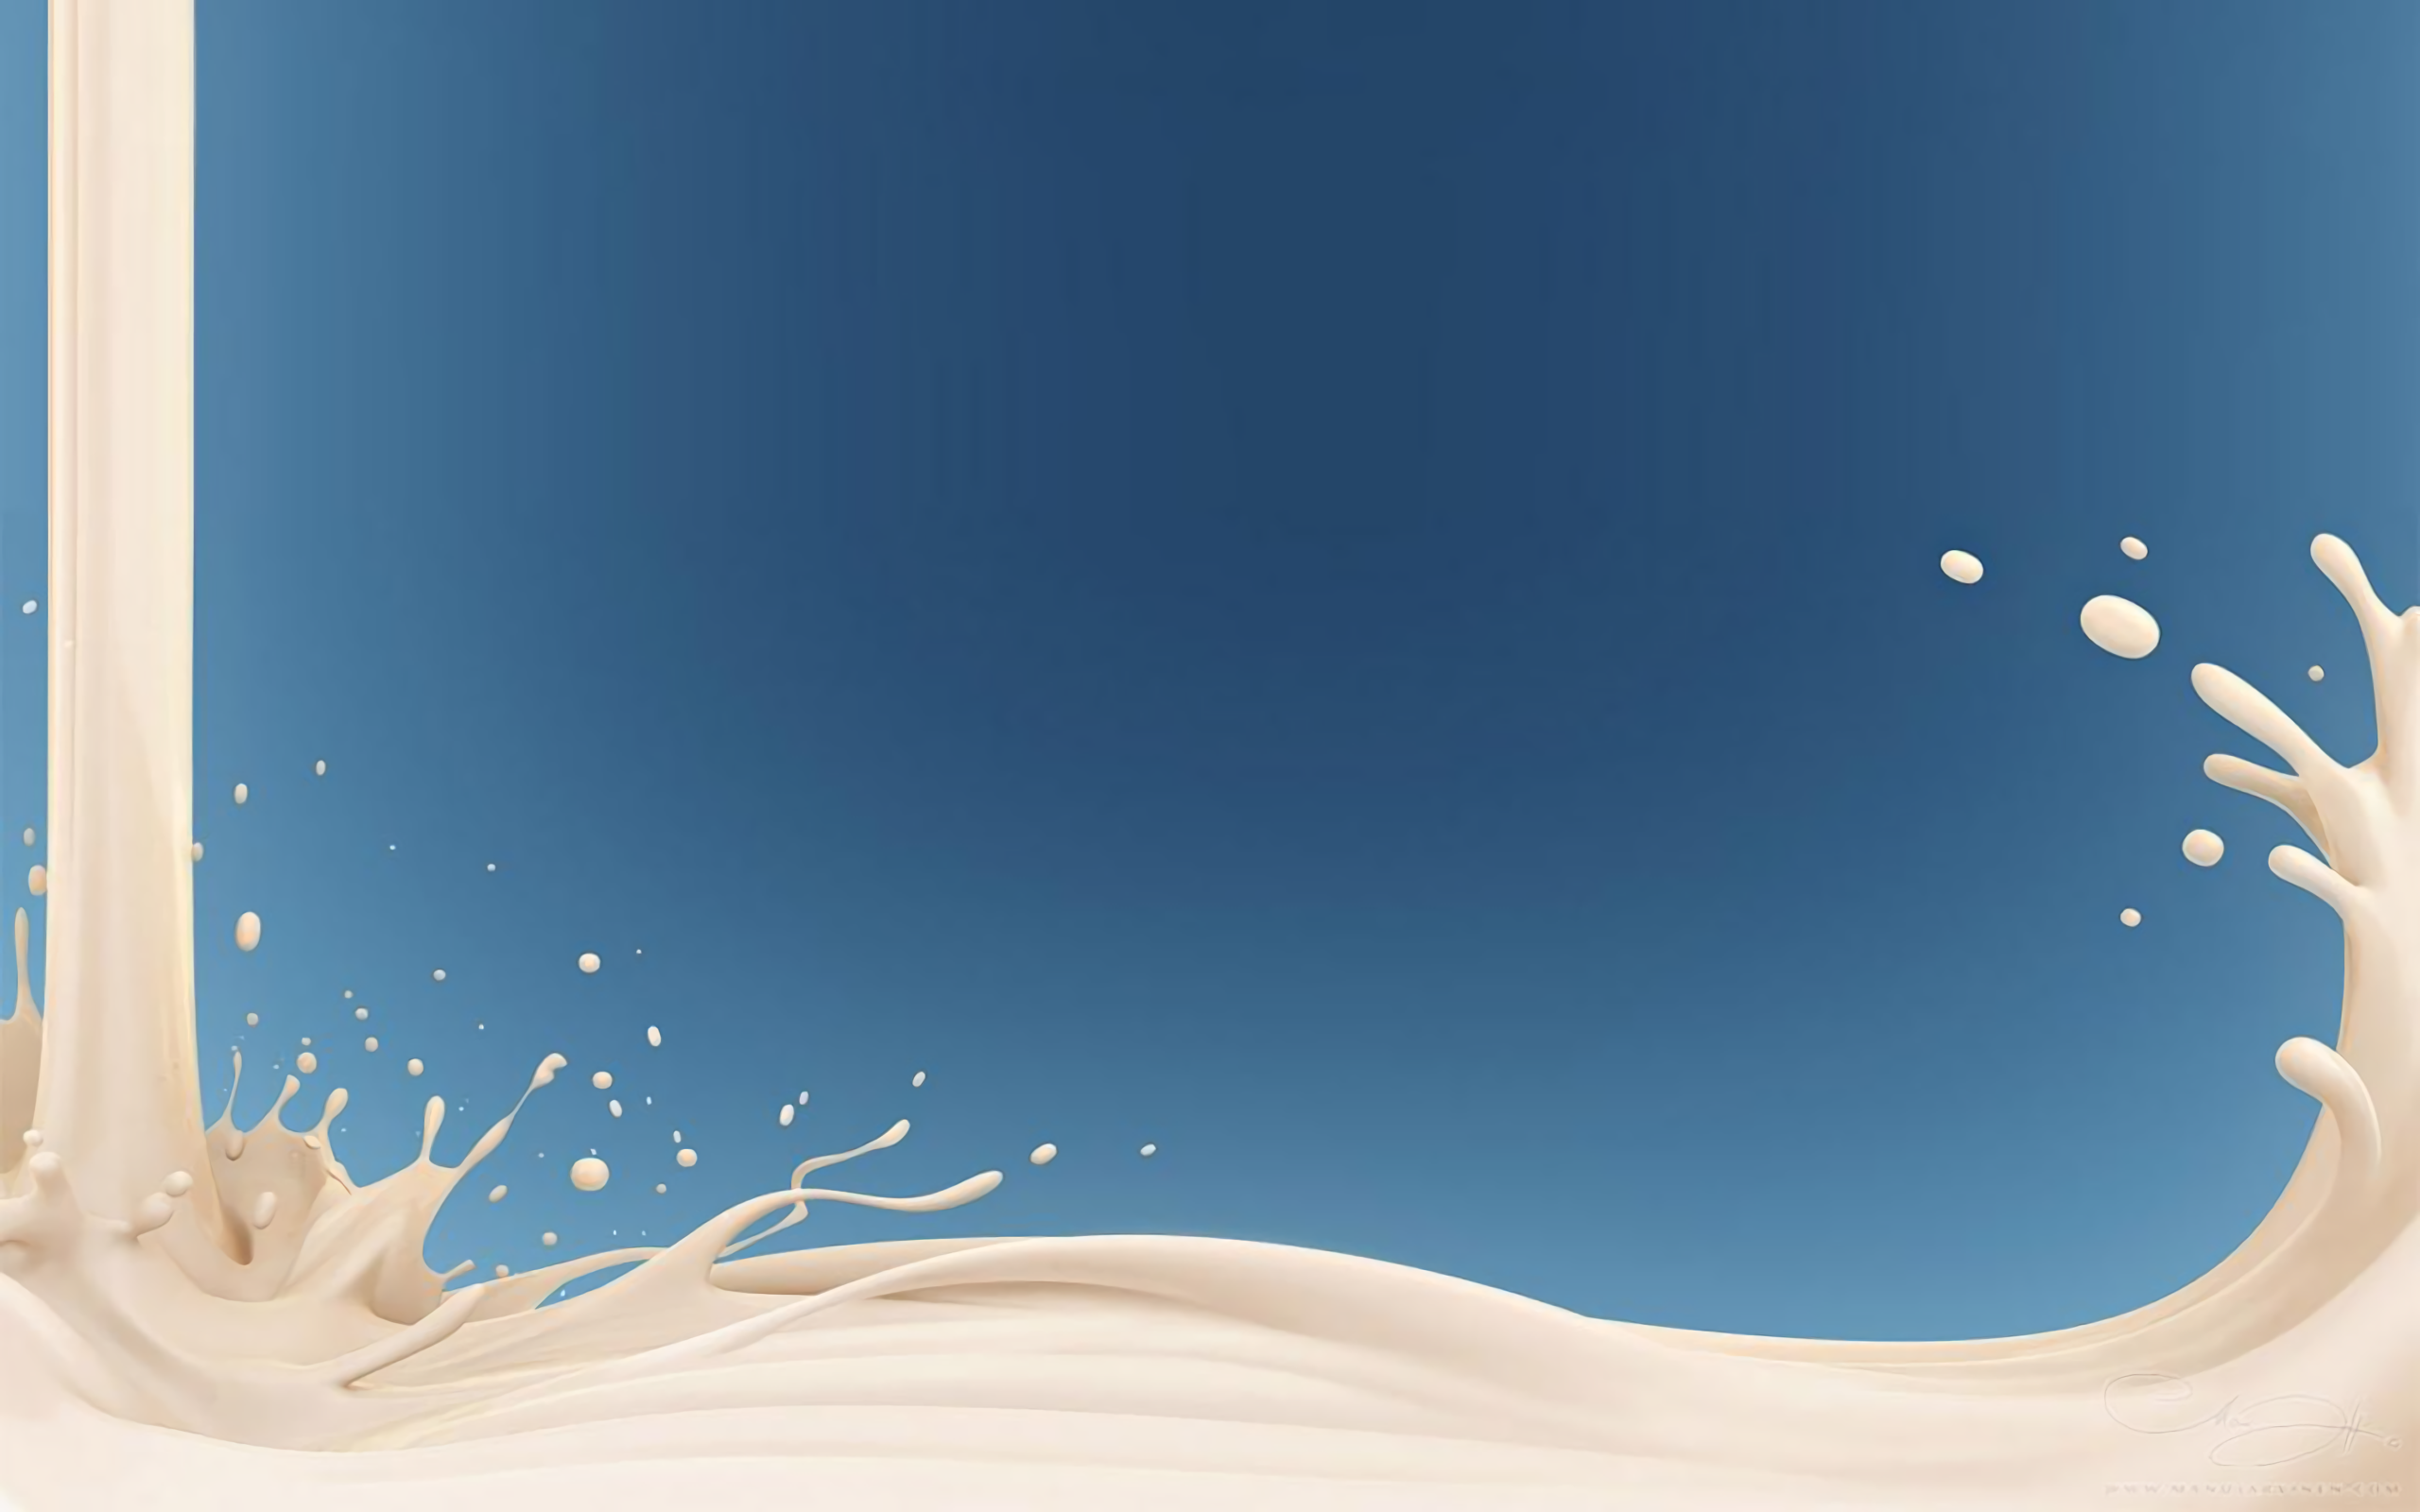 Milk HD Wallpaper Background Image 2560x1600 ID705823